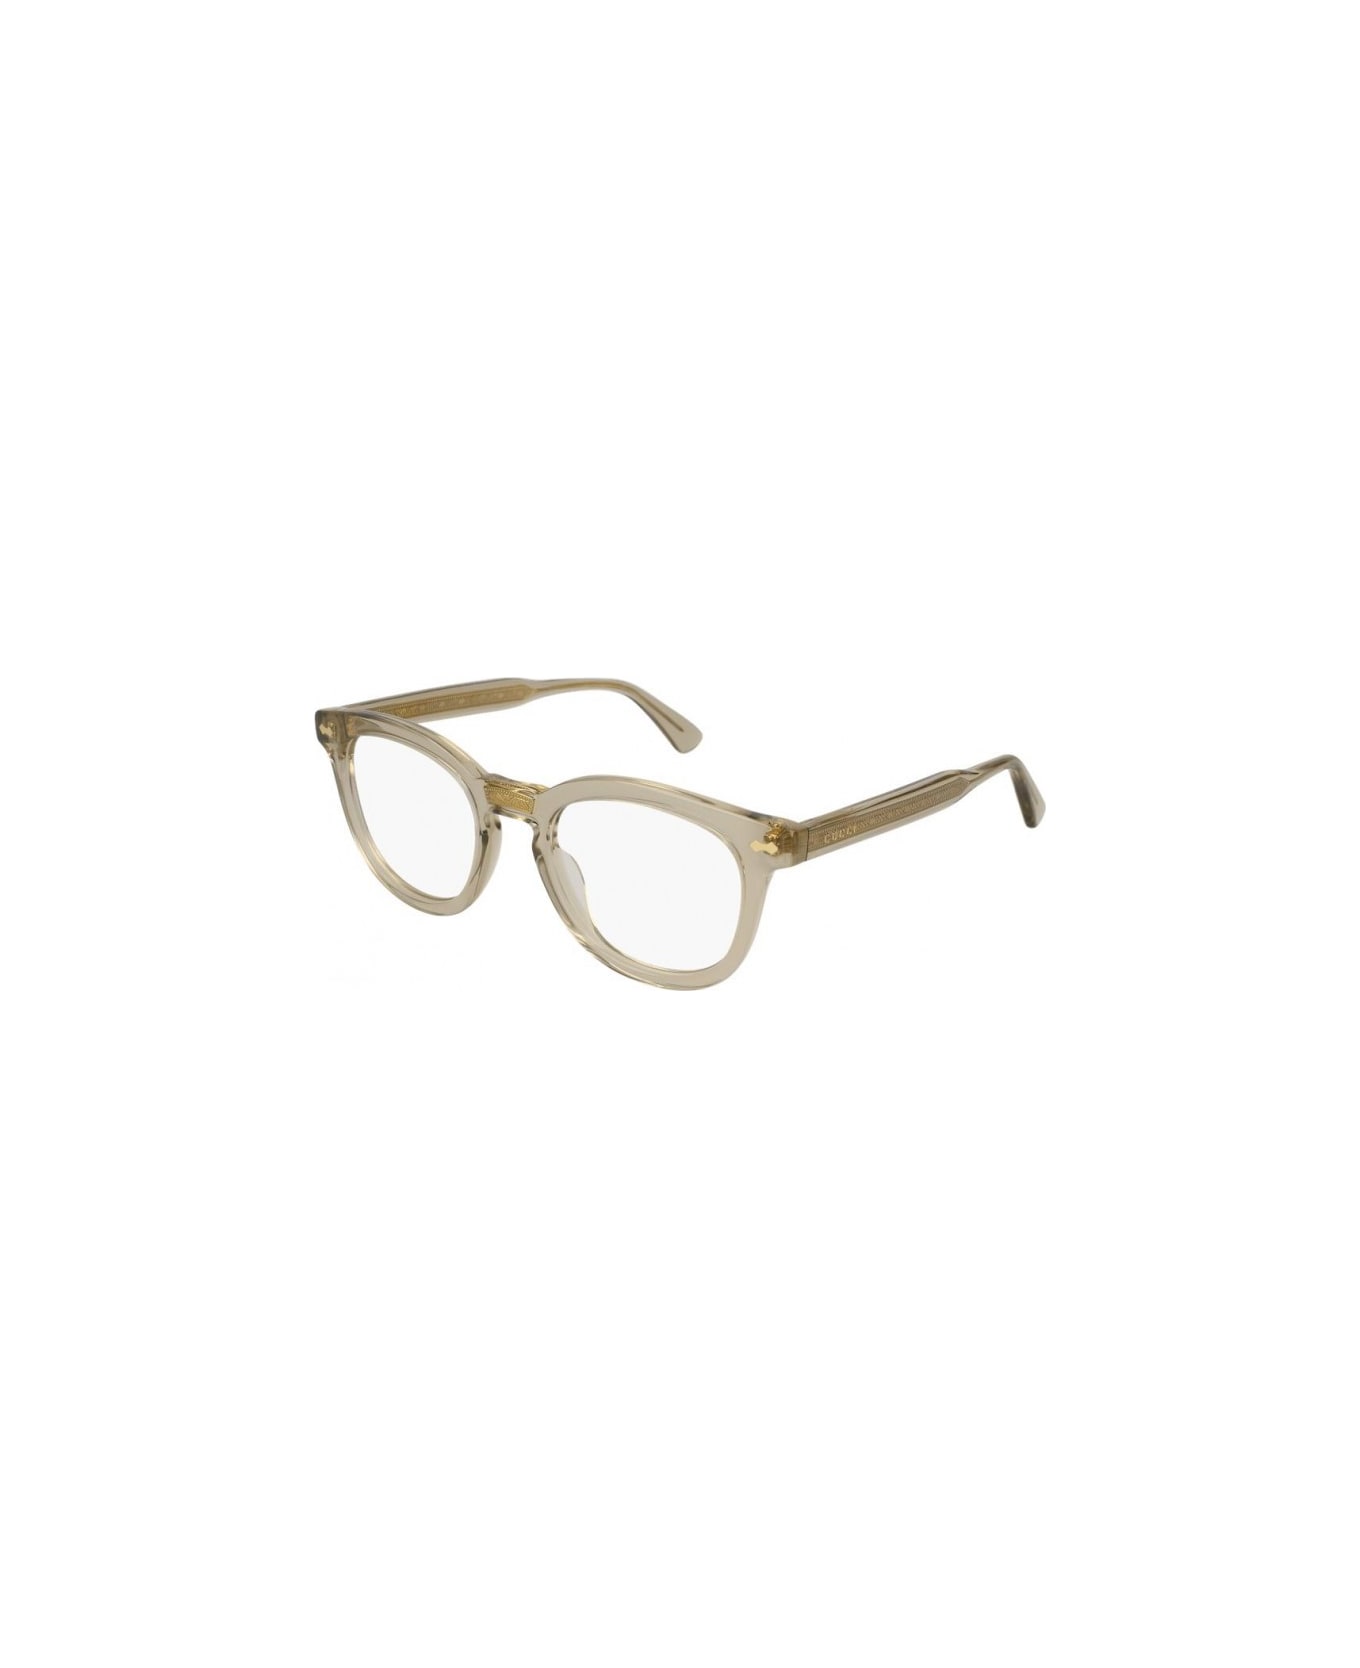 Gucci Eyewear Gg0183o Glasses - Avorio